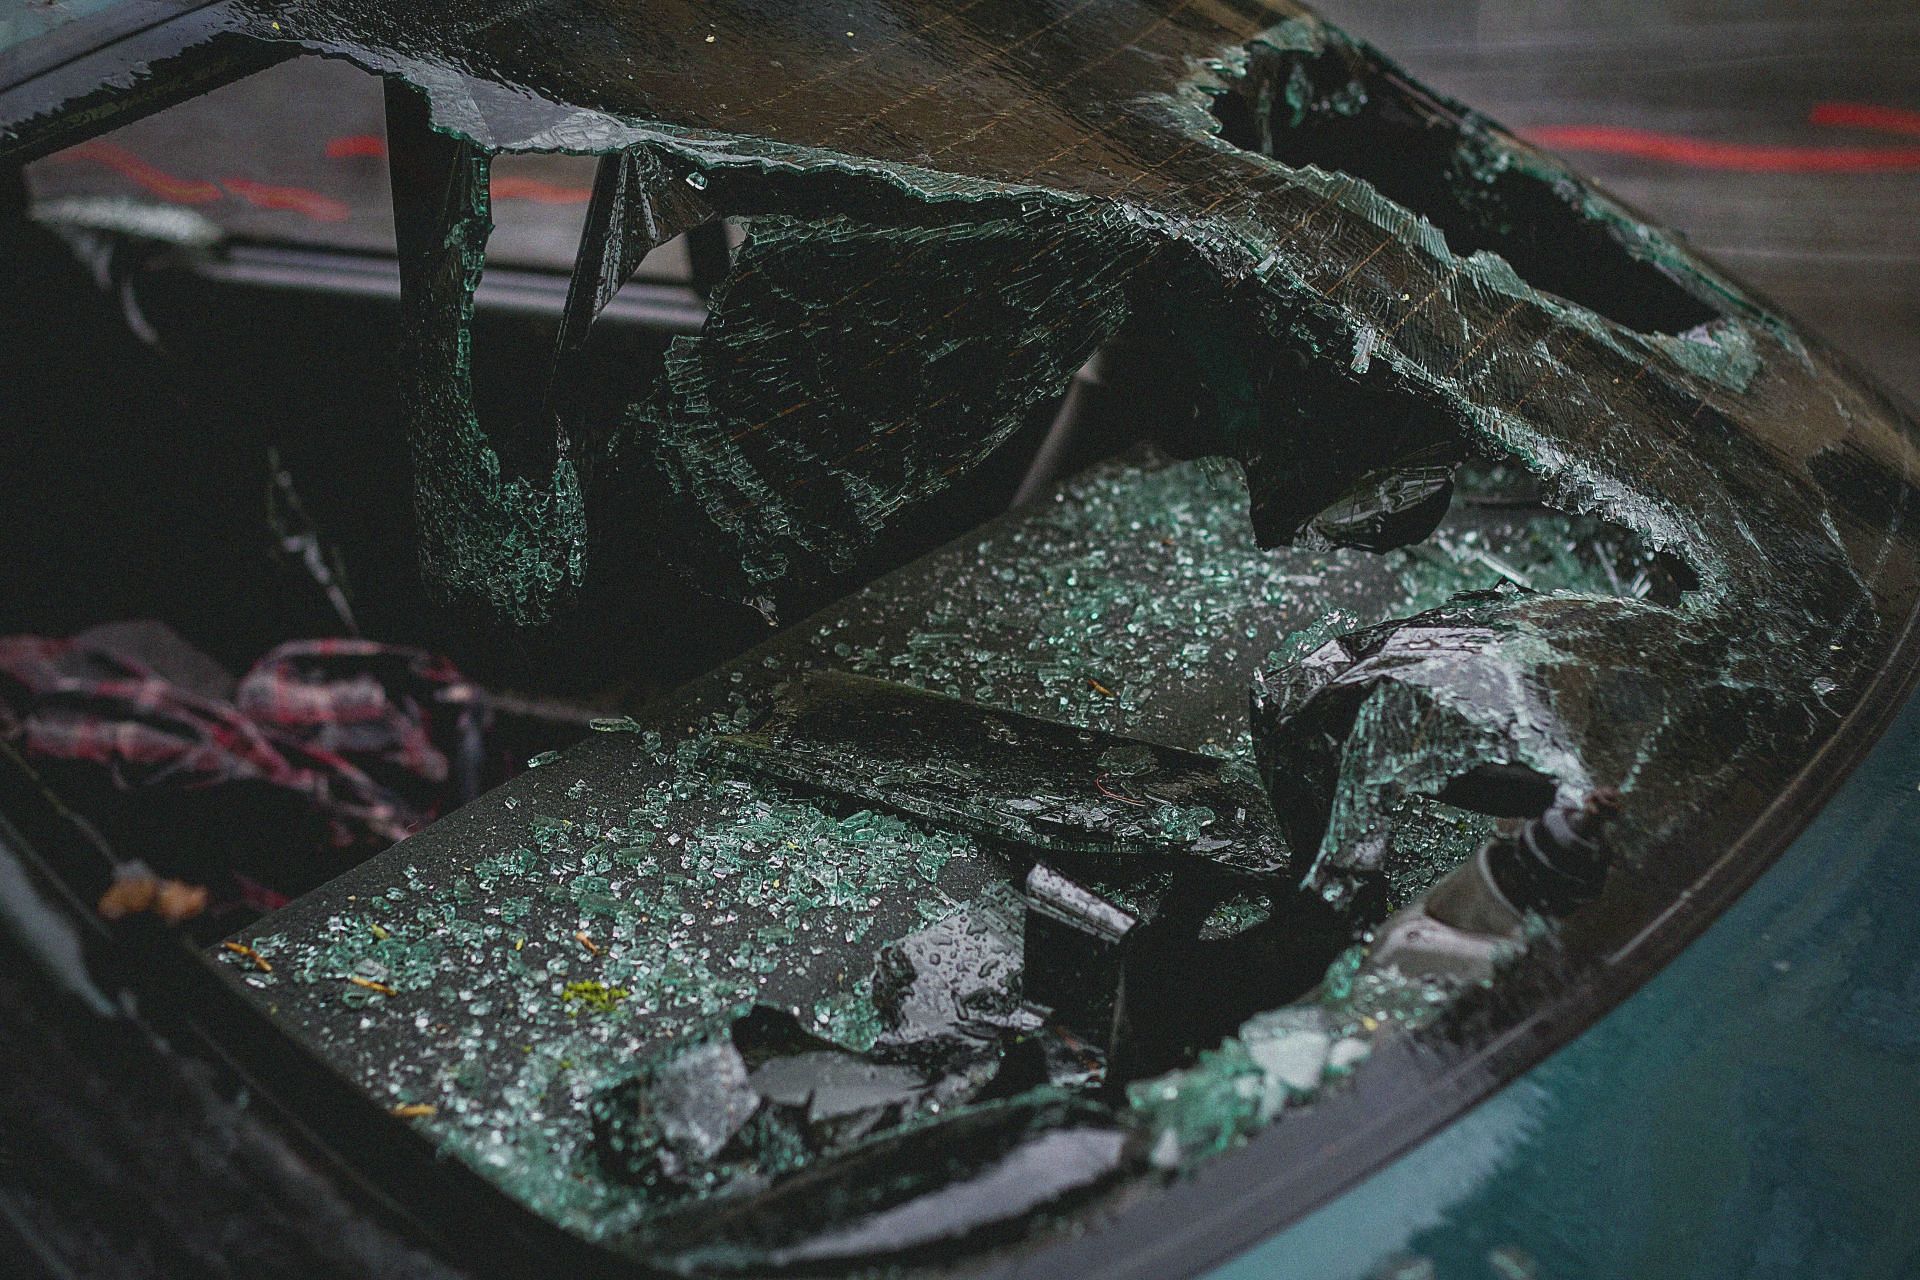 Man dies after Audi crashed into his car in Soho Road (Image via Pexels)